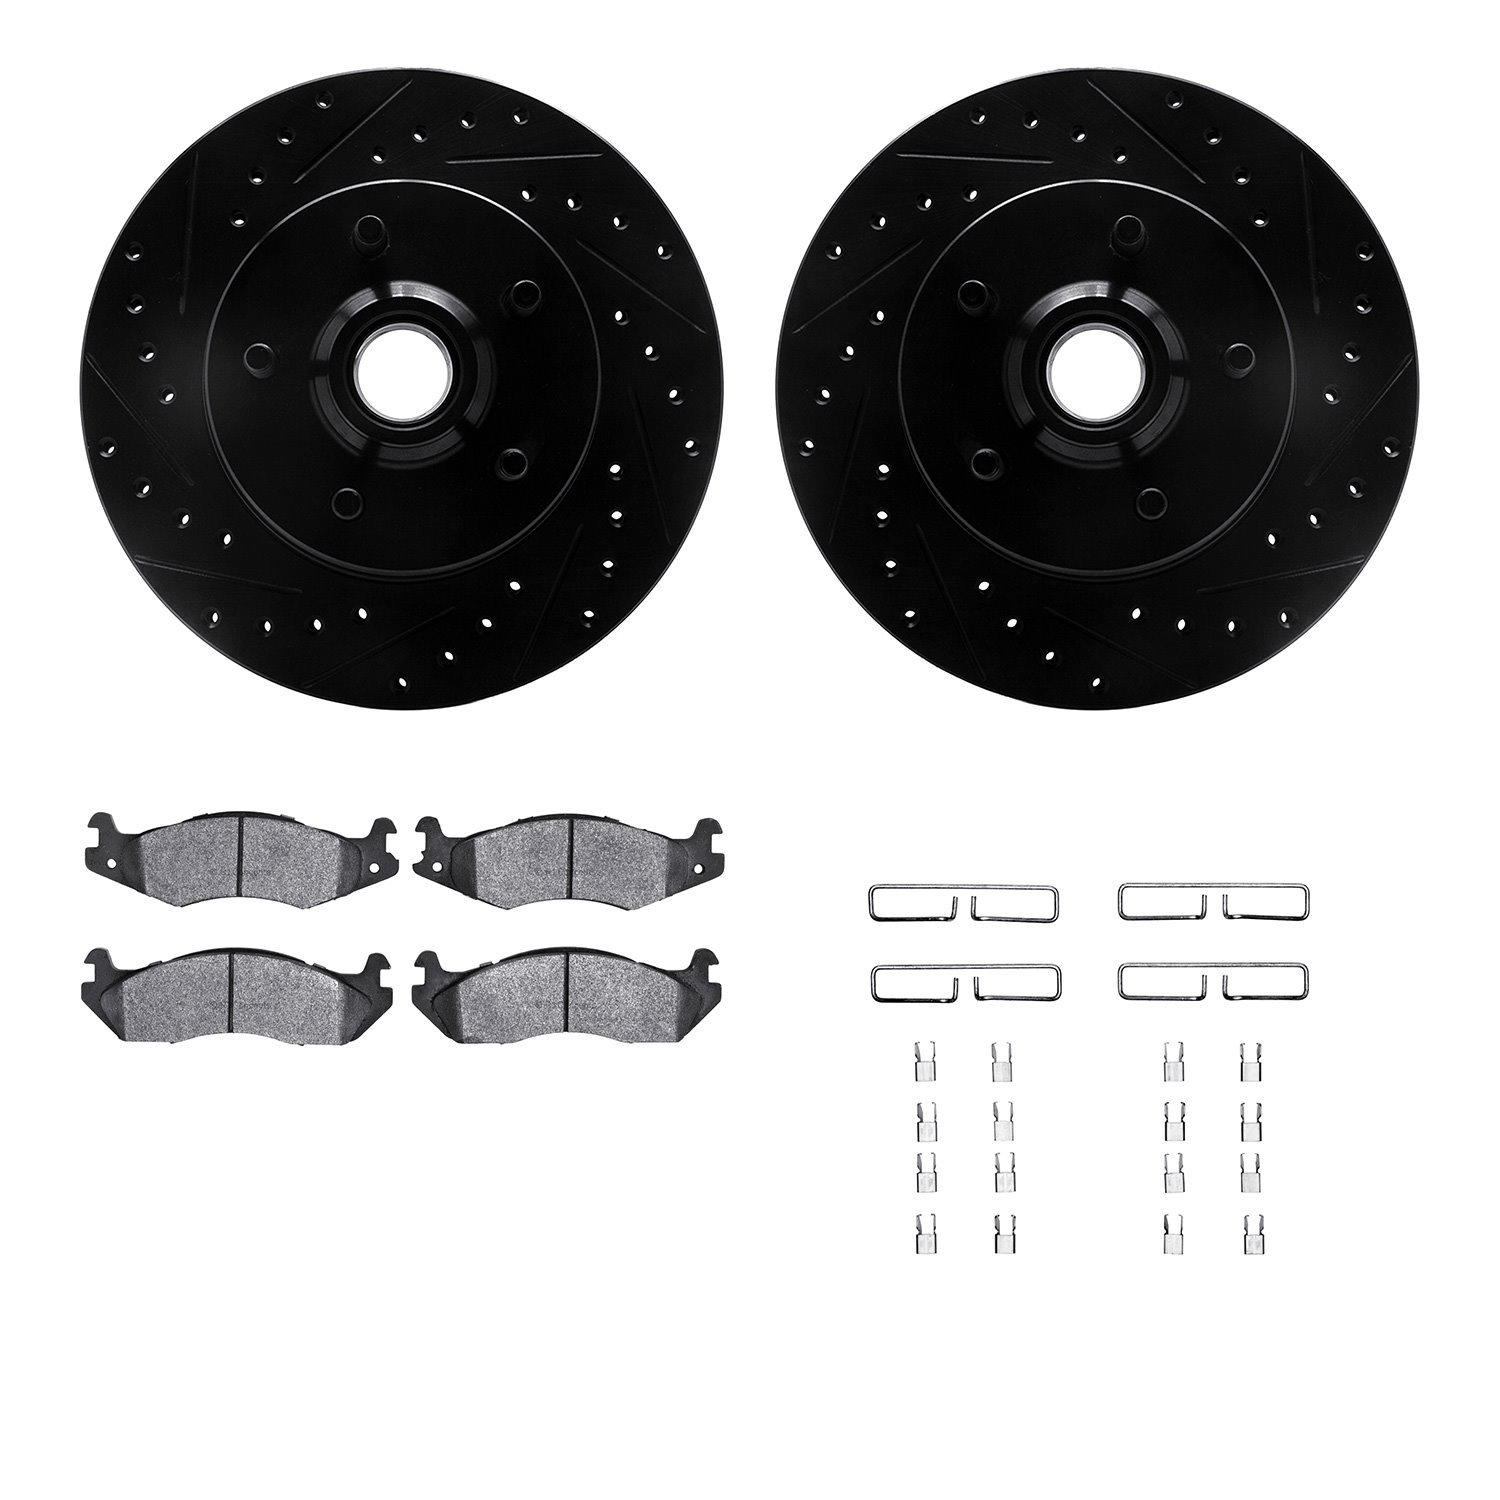 8412-42025 Drilled/Slotted Brake Rotors with Ultimate-Duty Brake Pads Kit & Hardware [Black], 1986-1992 Mopar, Position: Front